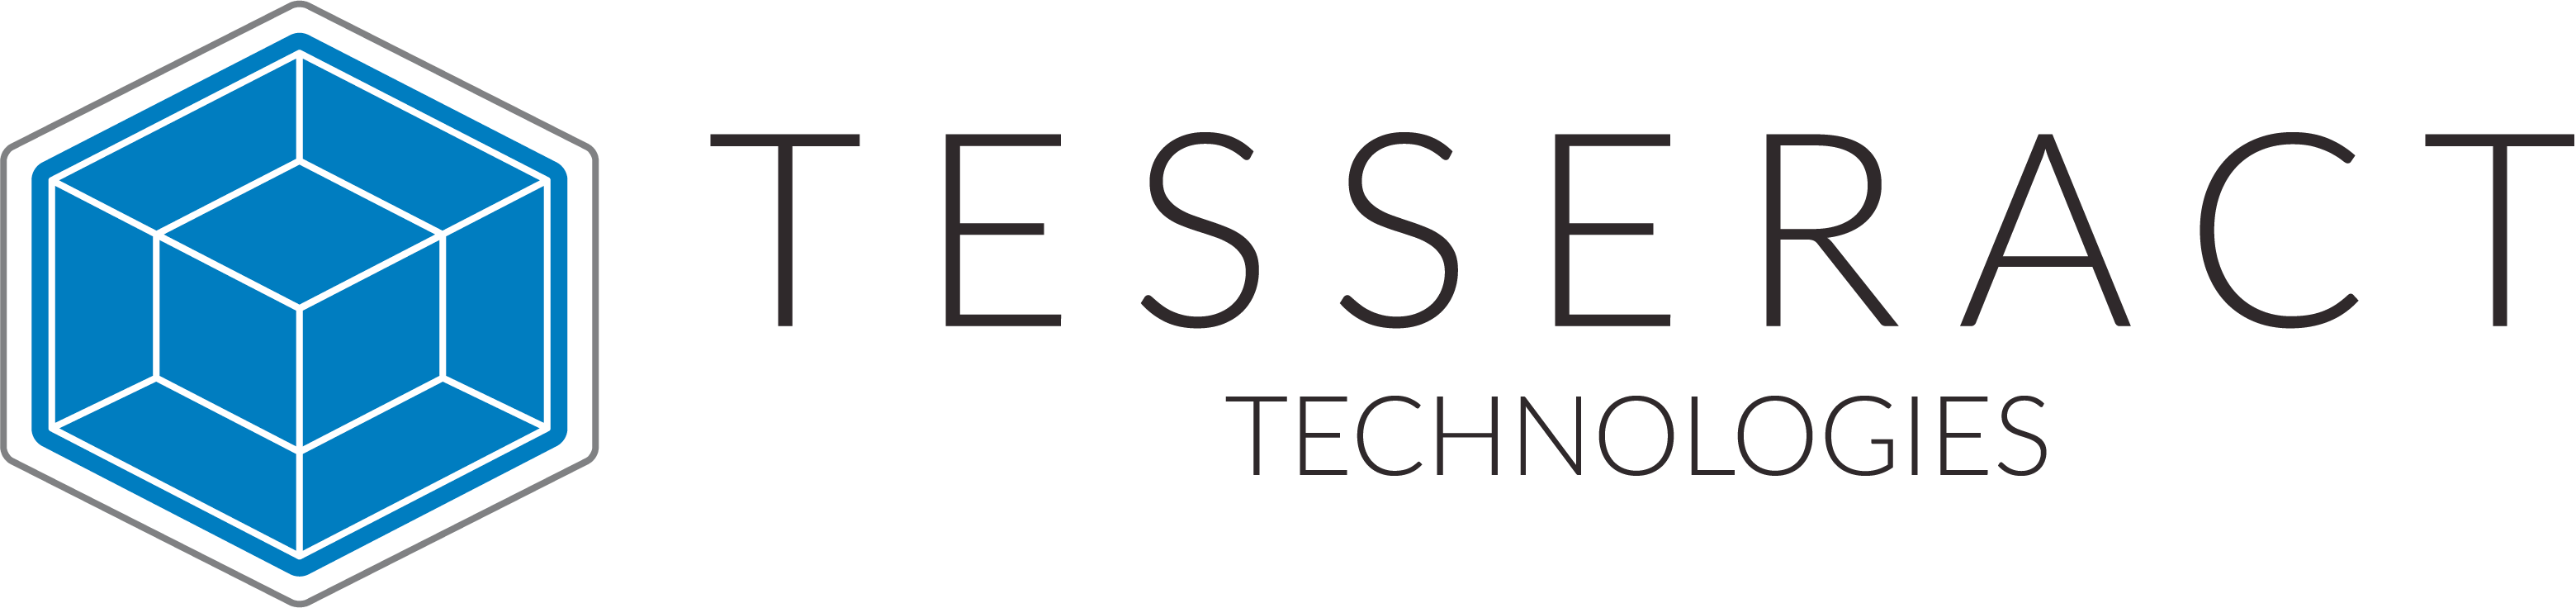 Tesseract Technologies